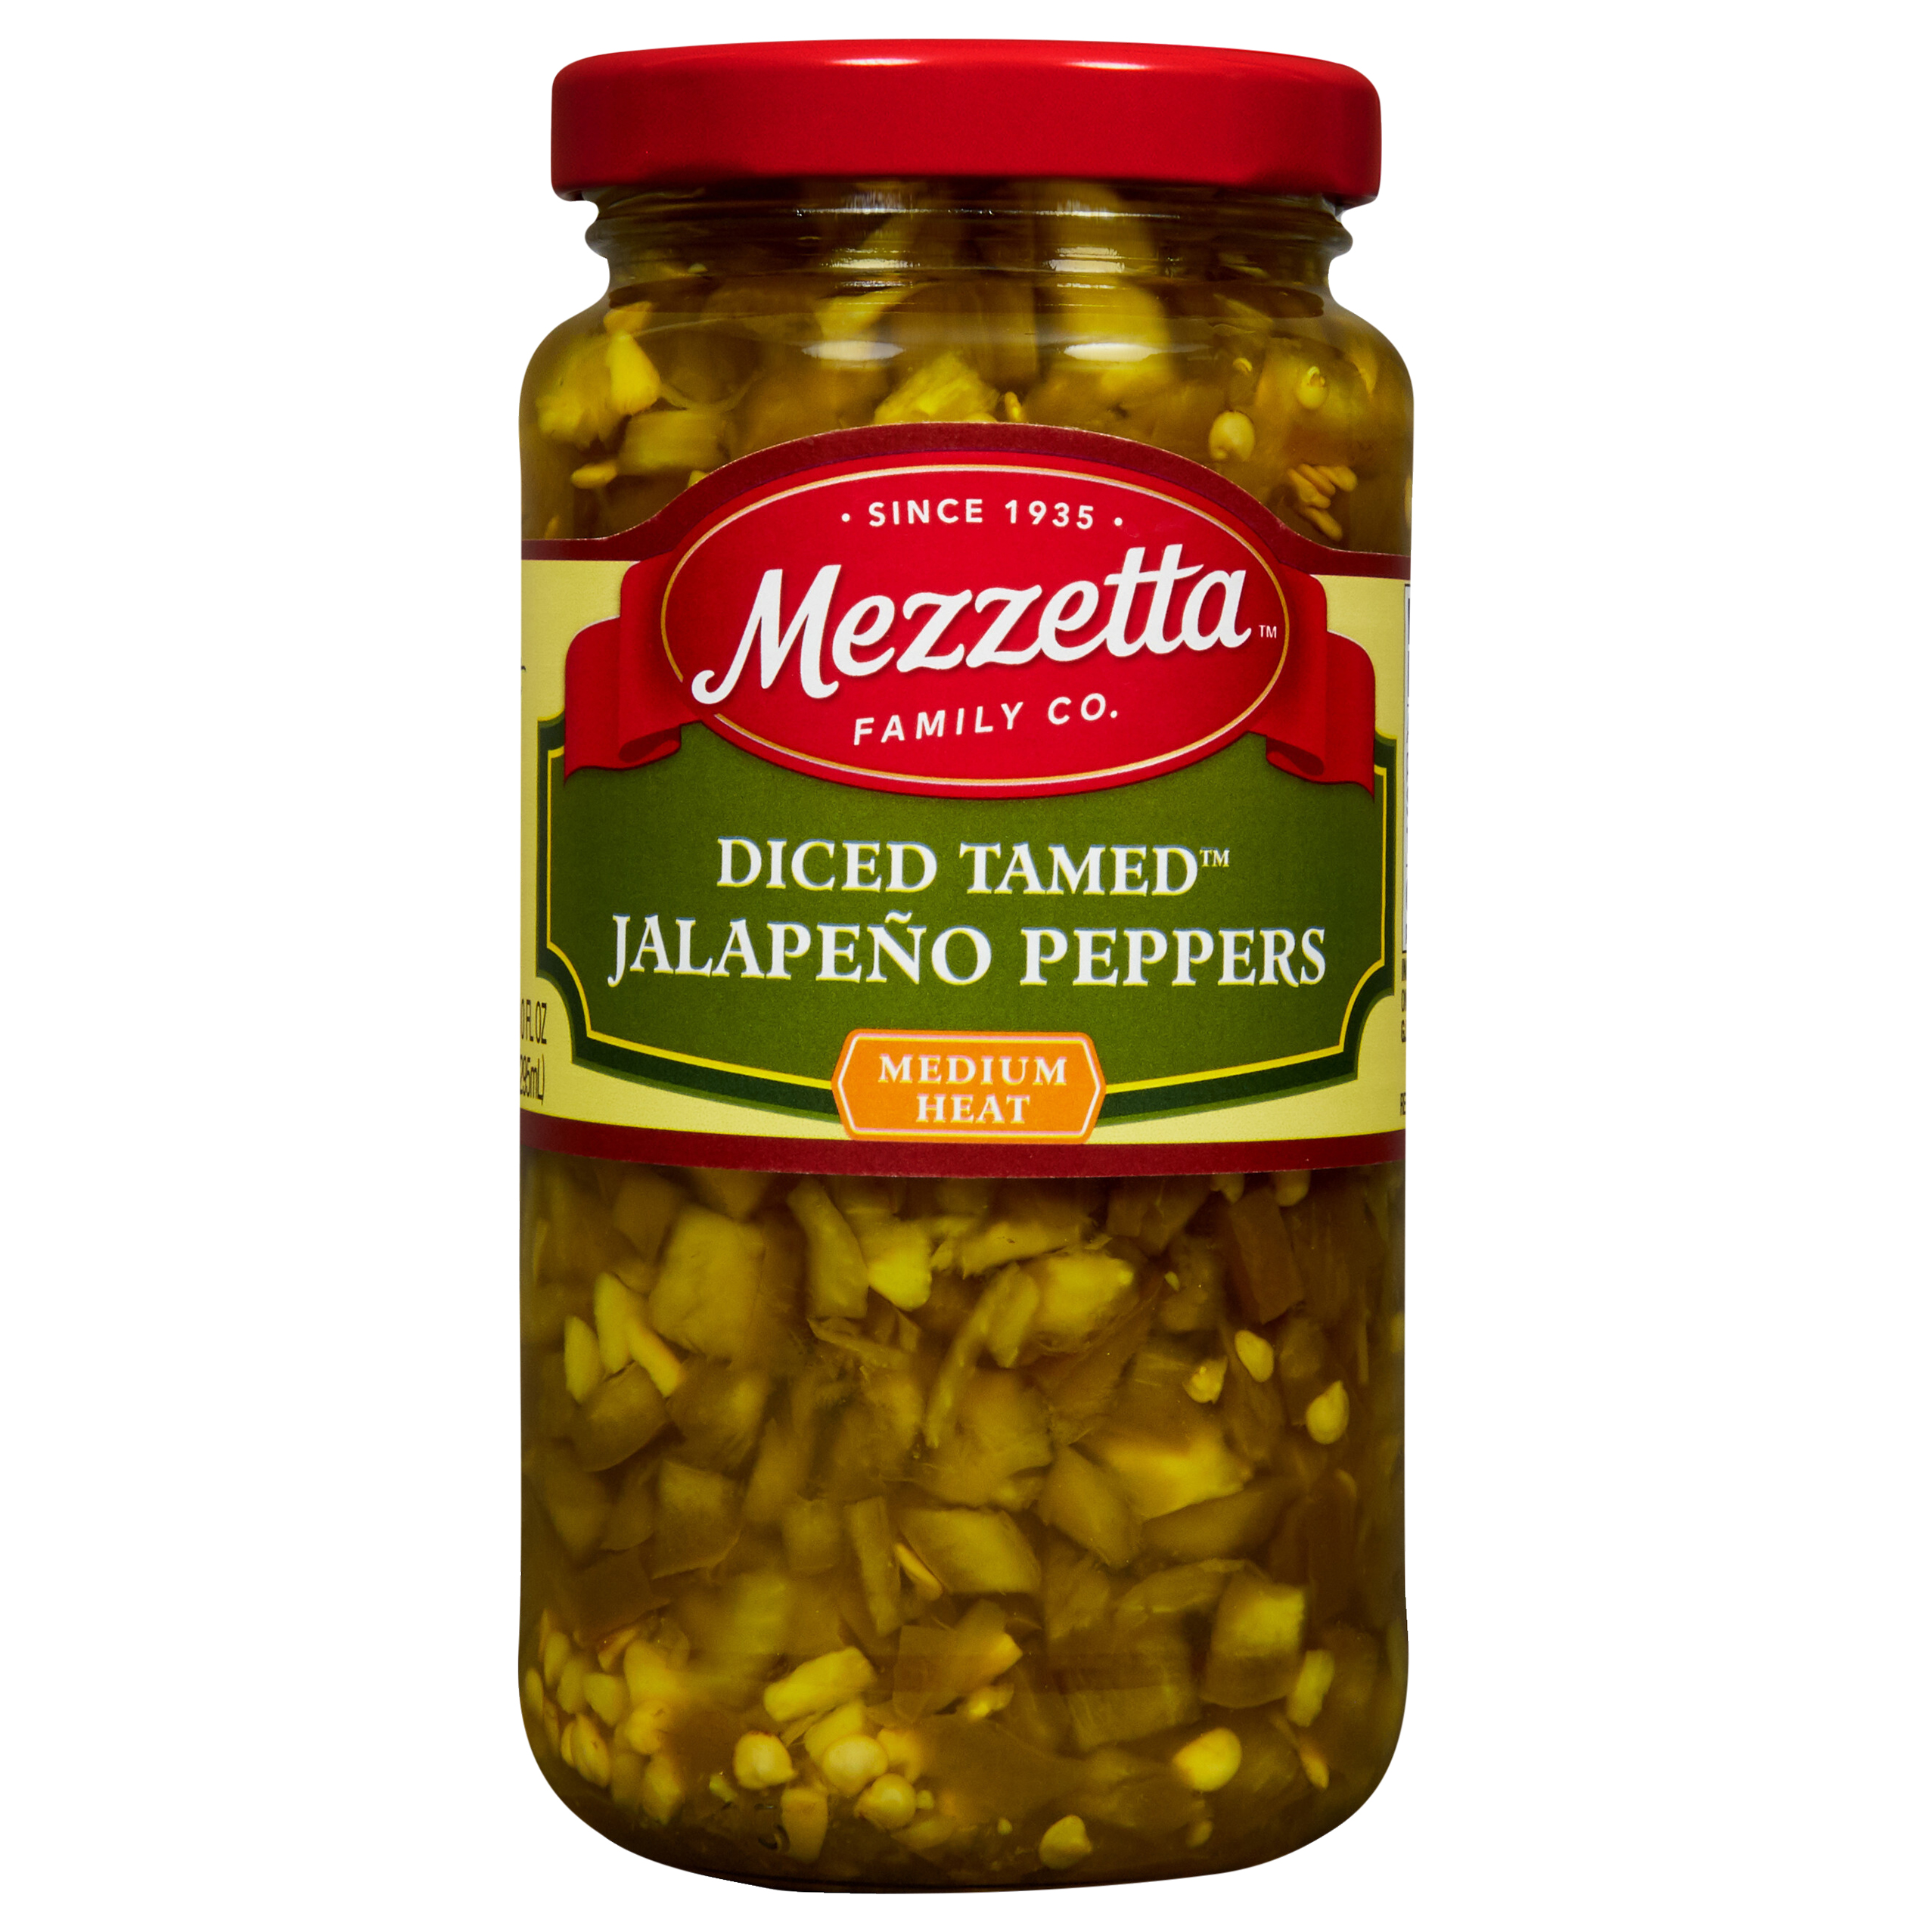 Jalapeno Peppers, Diced Tamed, Medium Heat